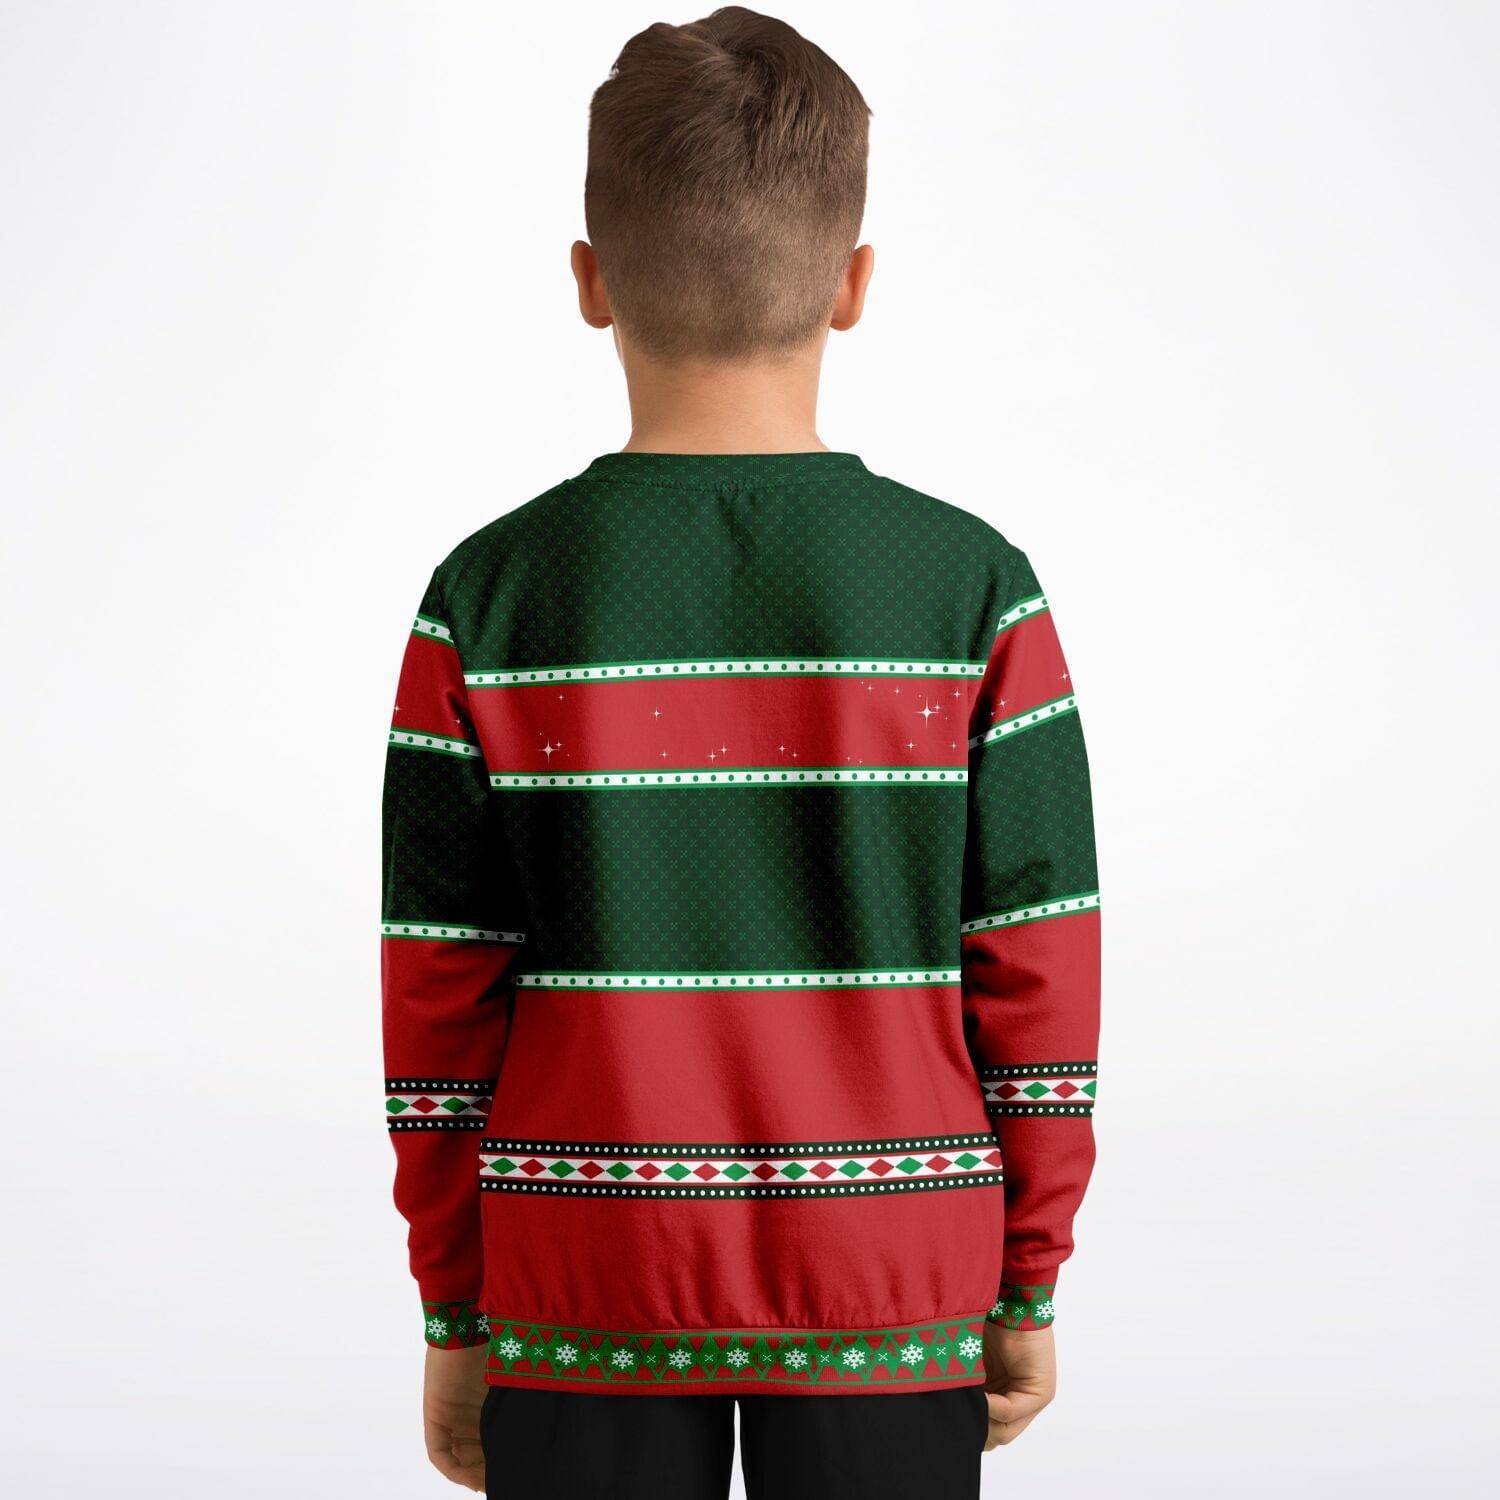 im-the-reason-santa-has-a-naughty-list-kids-sweatshirt